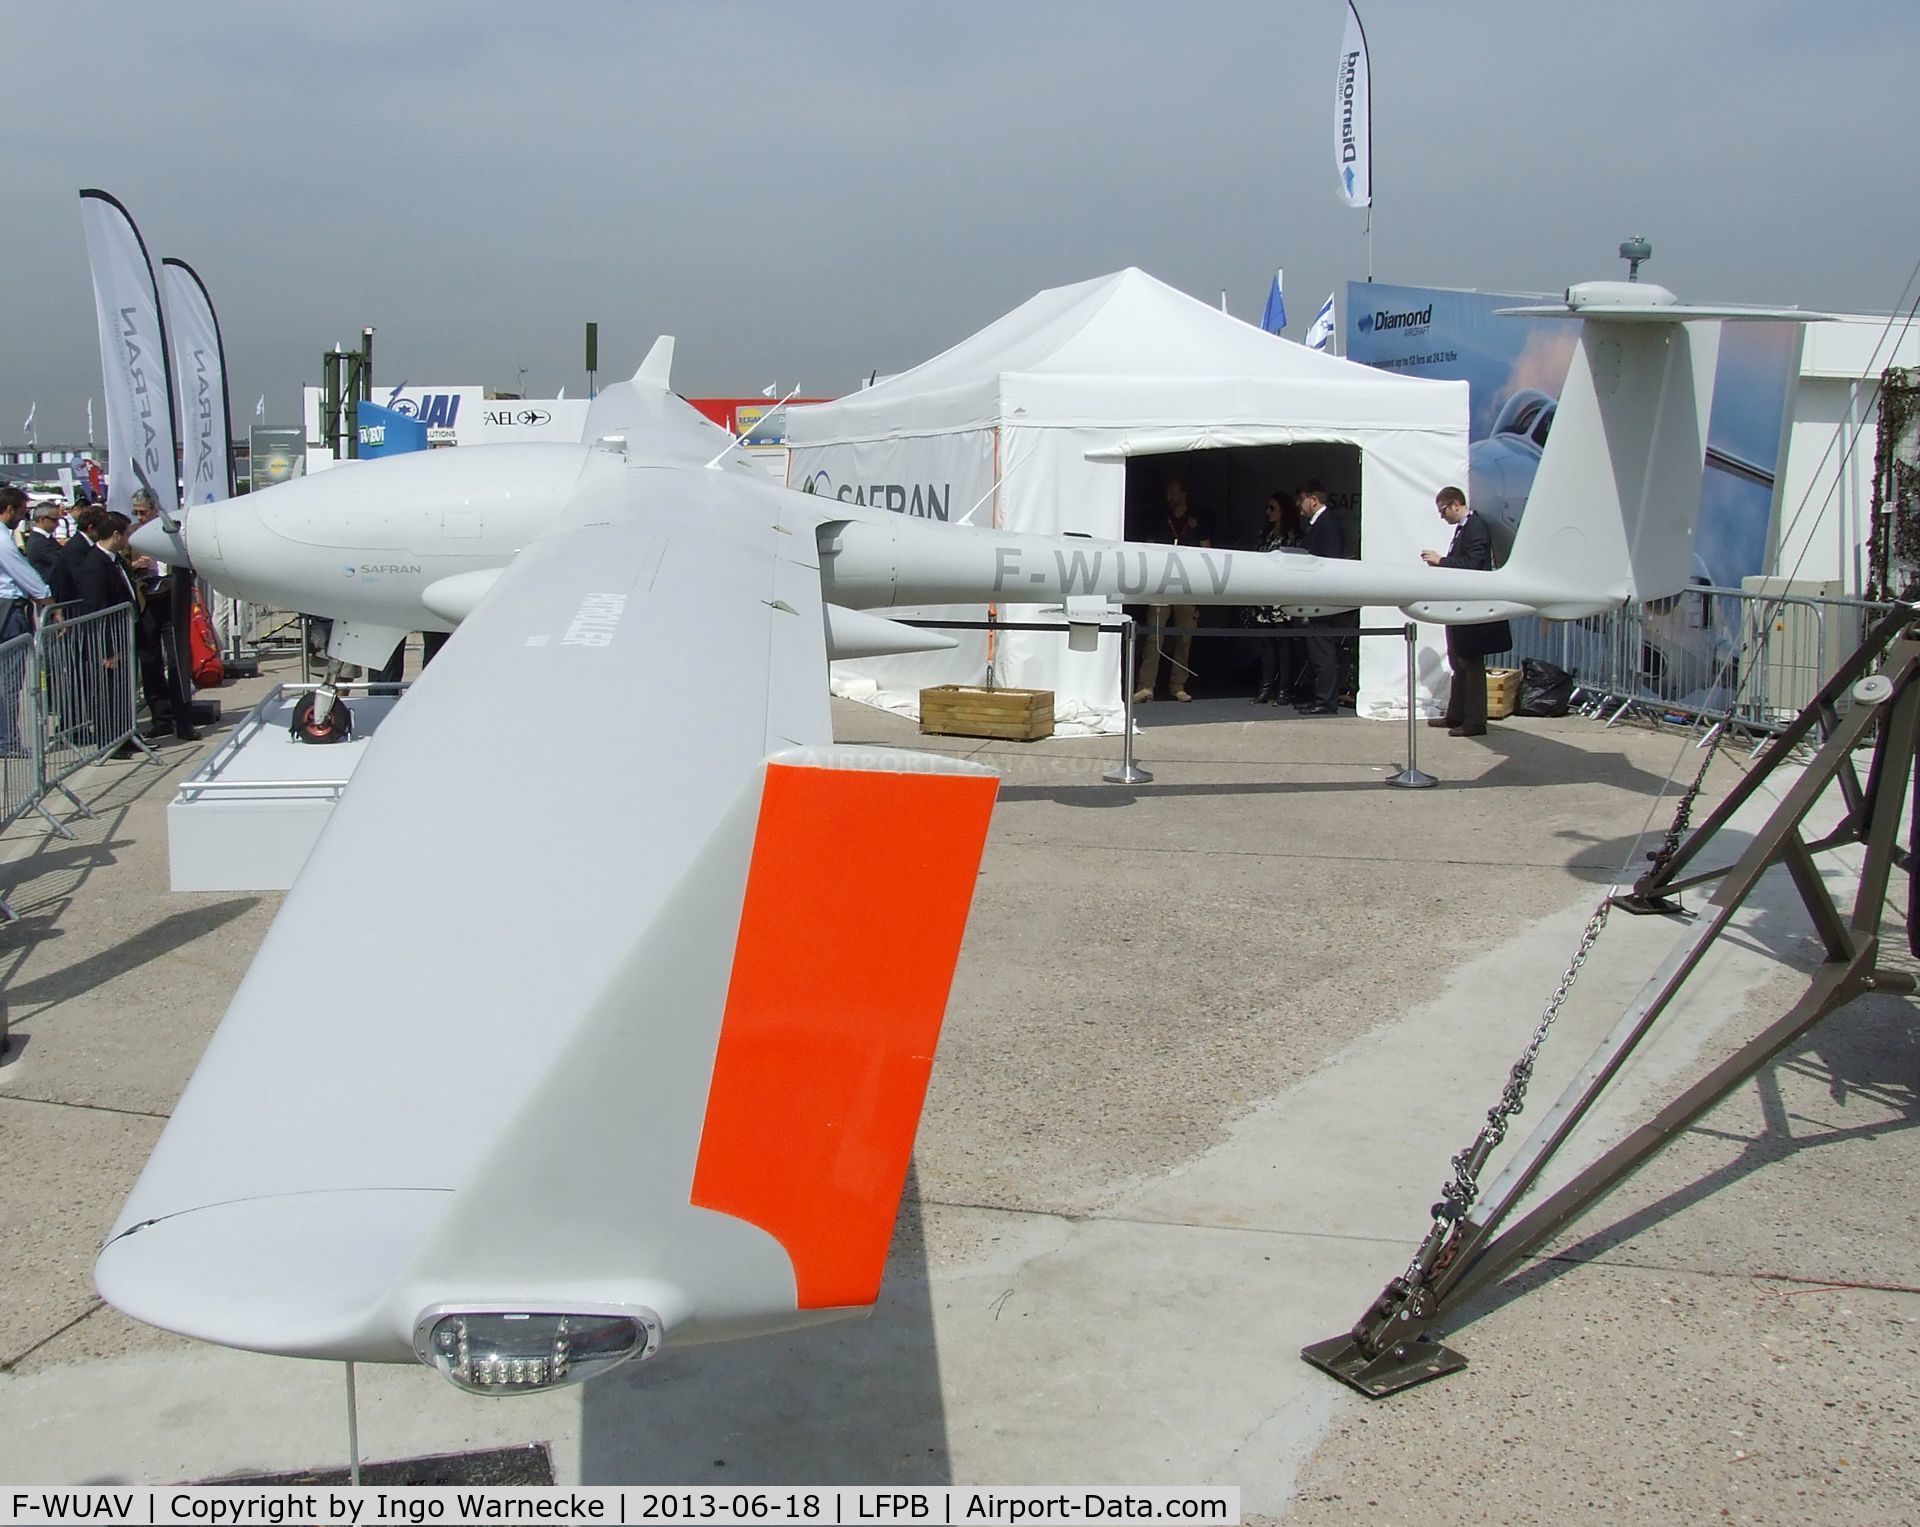 F-WUAV, 2009 Sagem S15 UAV Patroller V1 C/N 005, Stemme / Sagem S15 Patroller V1 UAV at the Aerosalon 2013, Paris